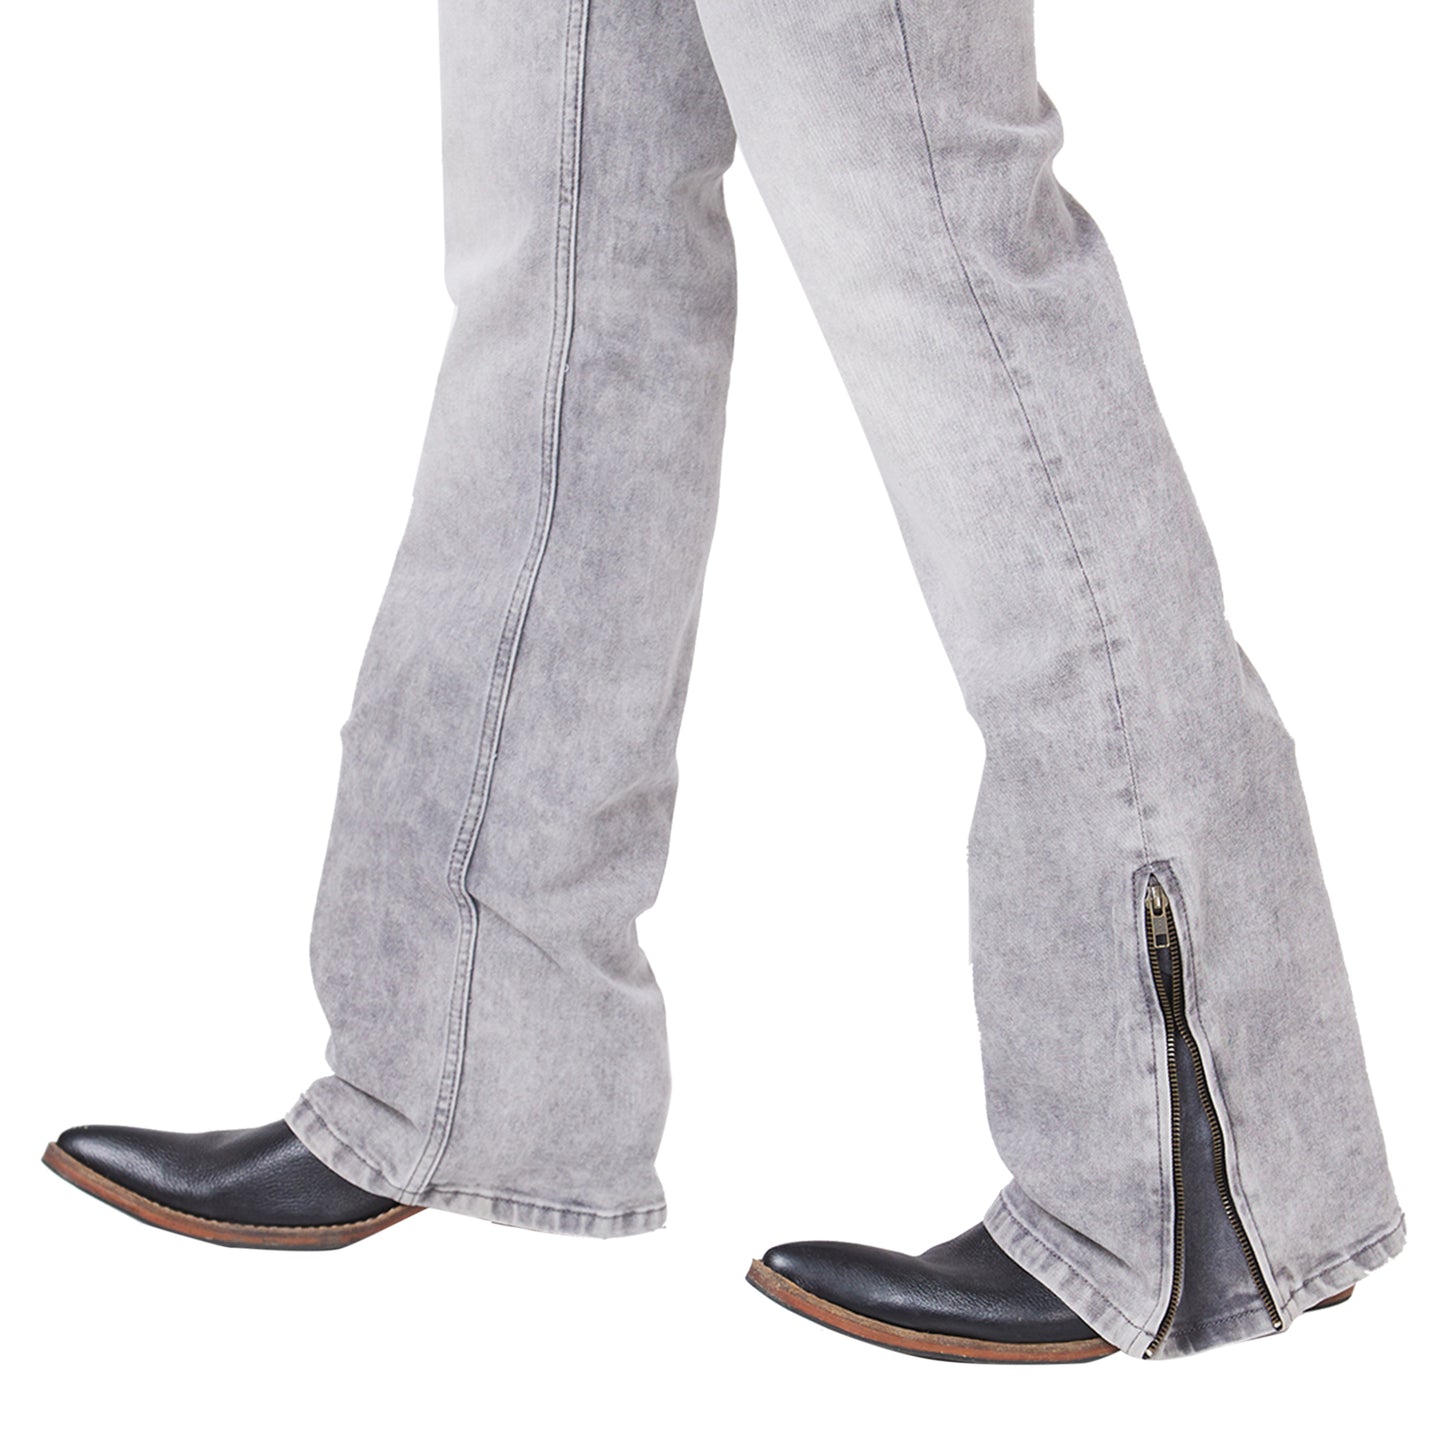 Men's Casual Slim Fit Denim Stretchable Boot-cut Jeans